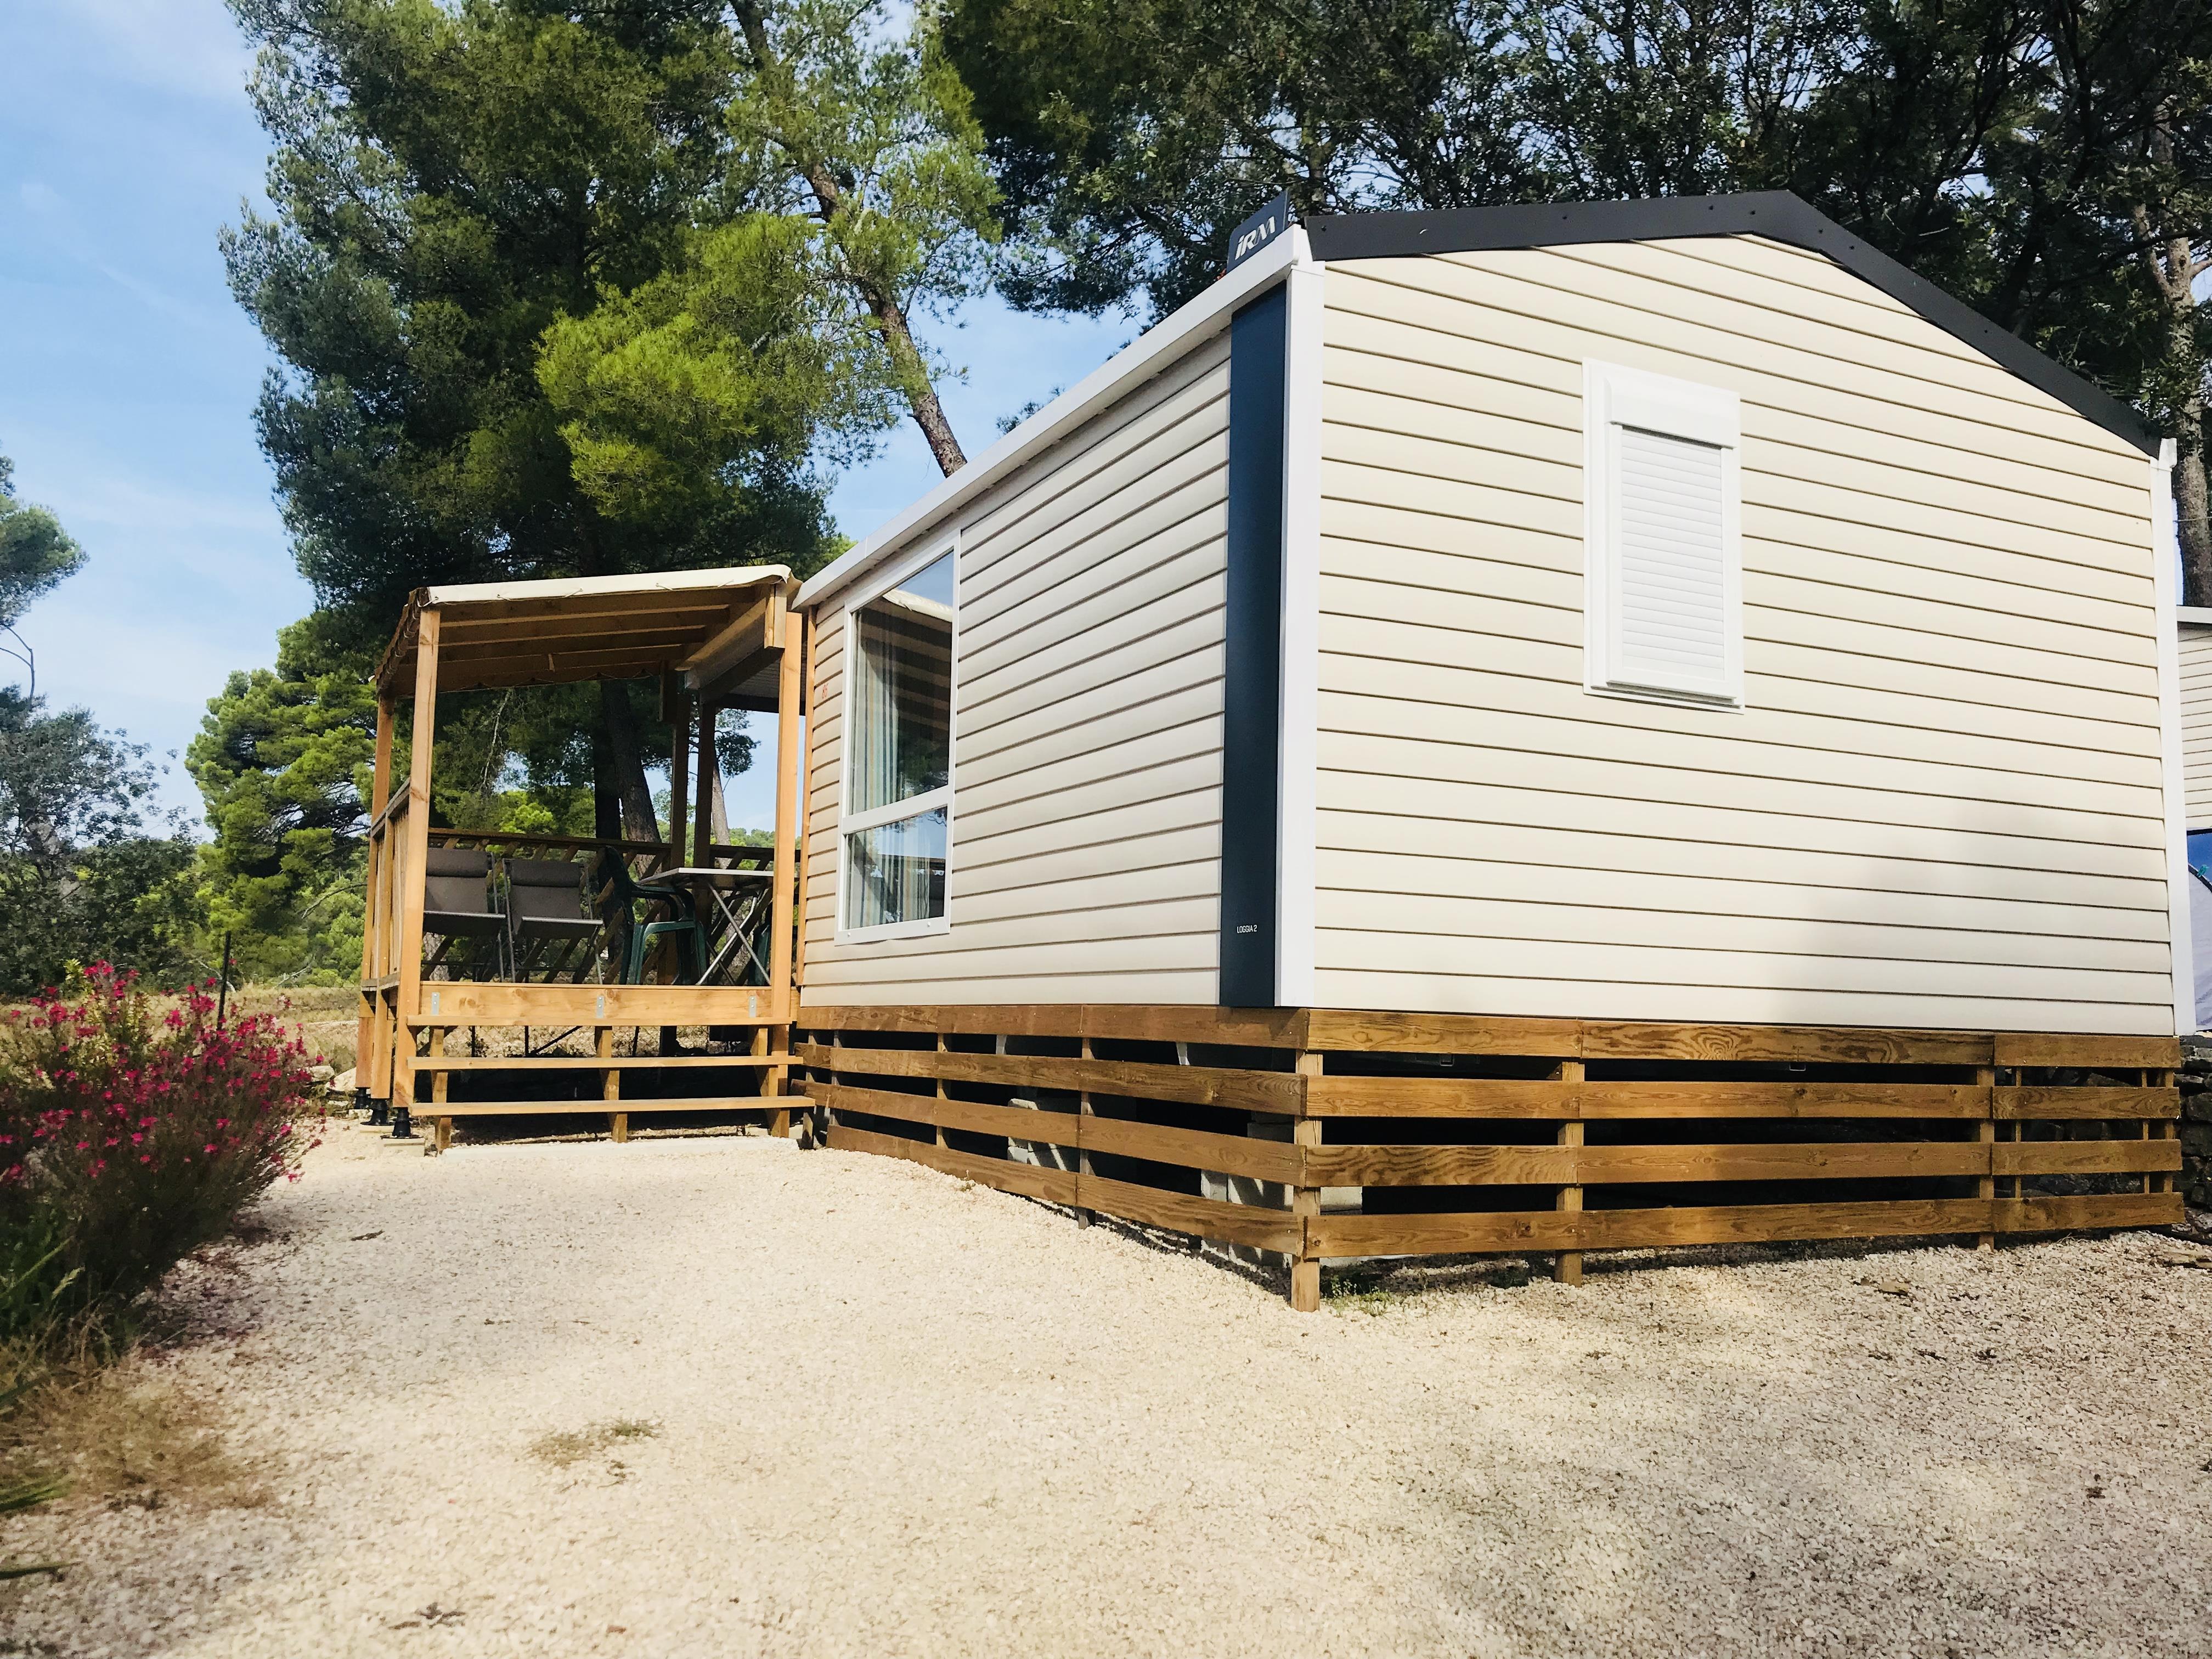 Location - Mobil Home Confort 2 Chambres 7.5Mx4m (28-30M2) + Terrasse Semi Couverte + Climatisation + Télévision - Camping Ceyreste